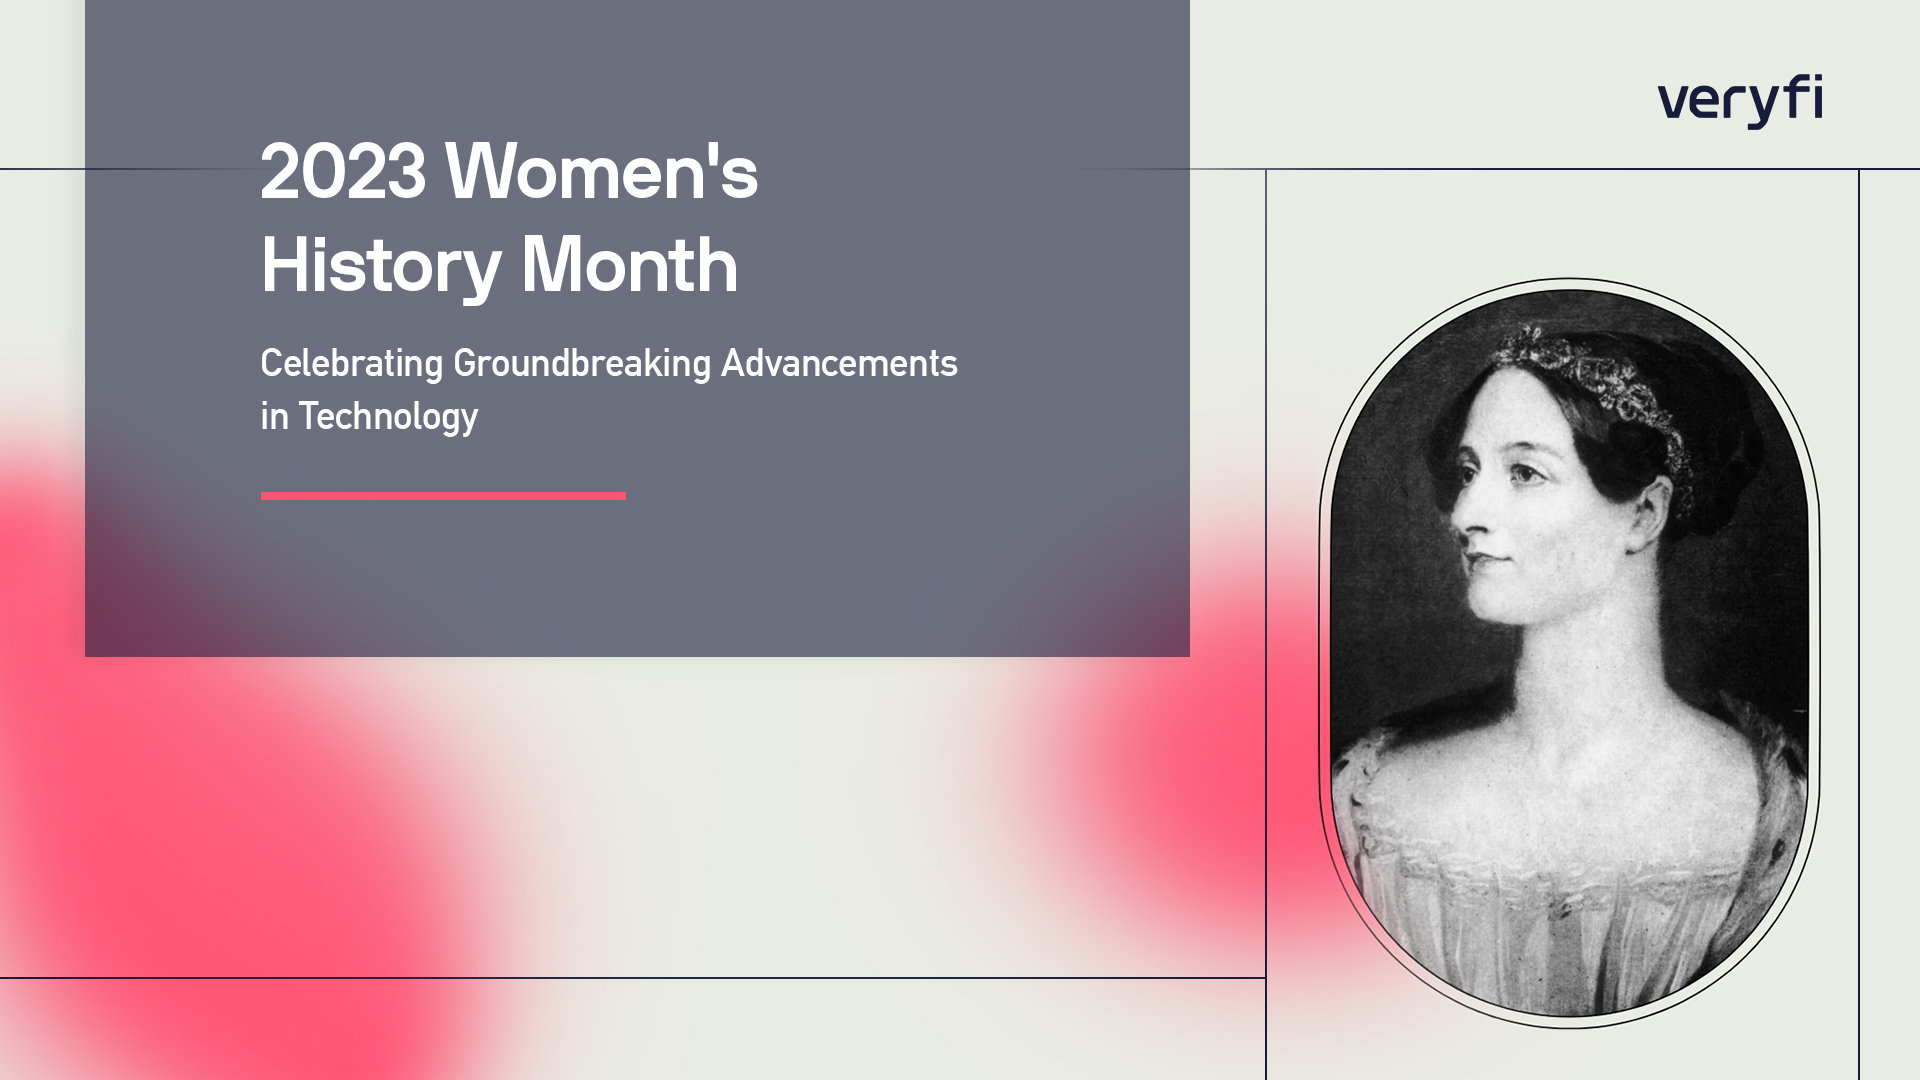 A portrait of Ada Lovelace for Women's History month.